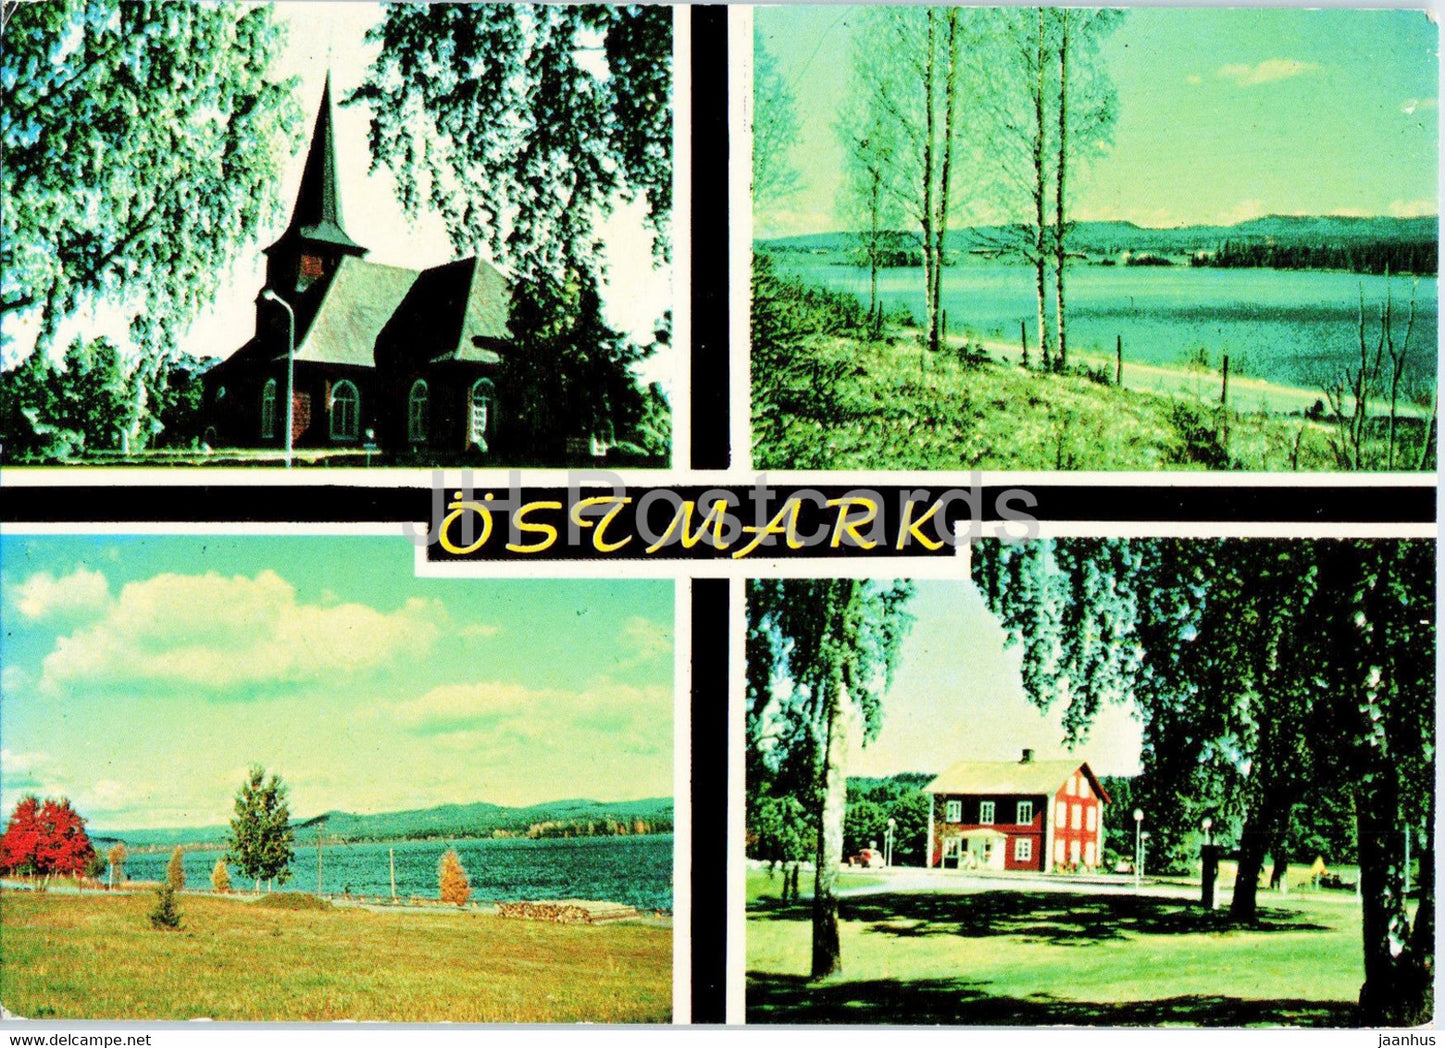 Ostmark - church - multiview - 2293 - Sweden - unused - JH Postcards